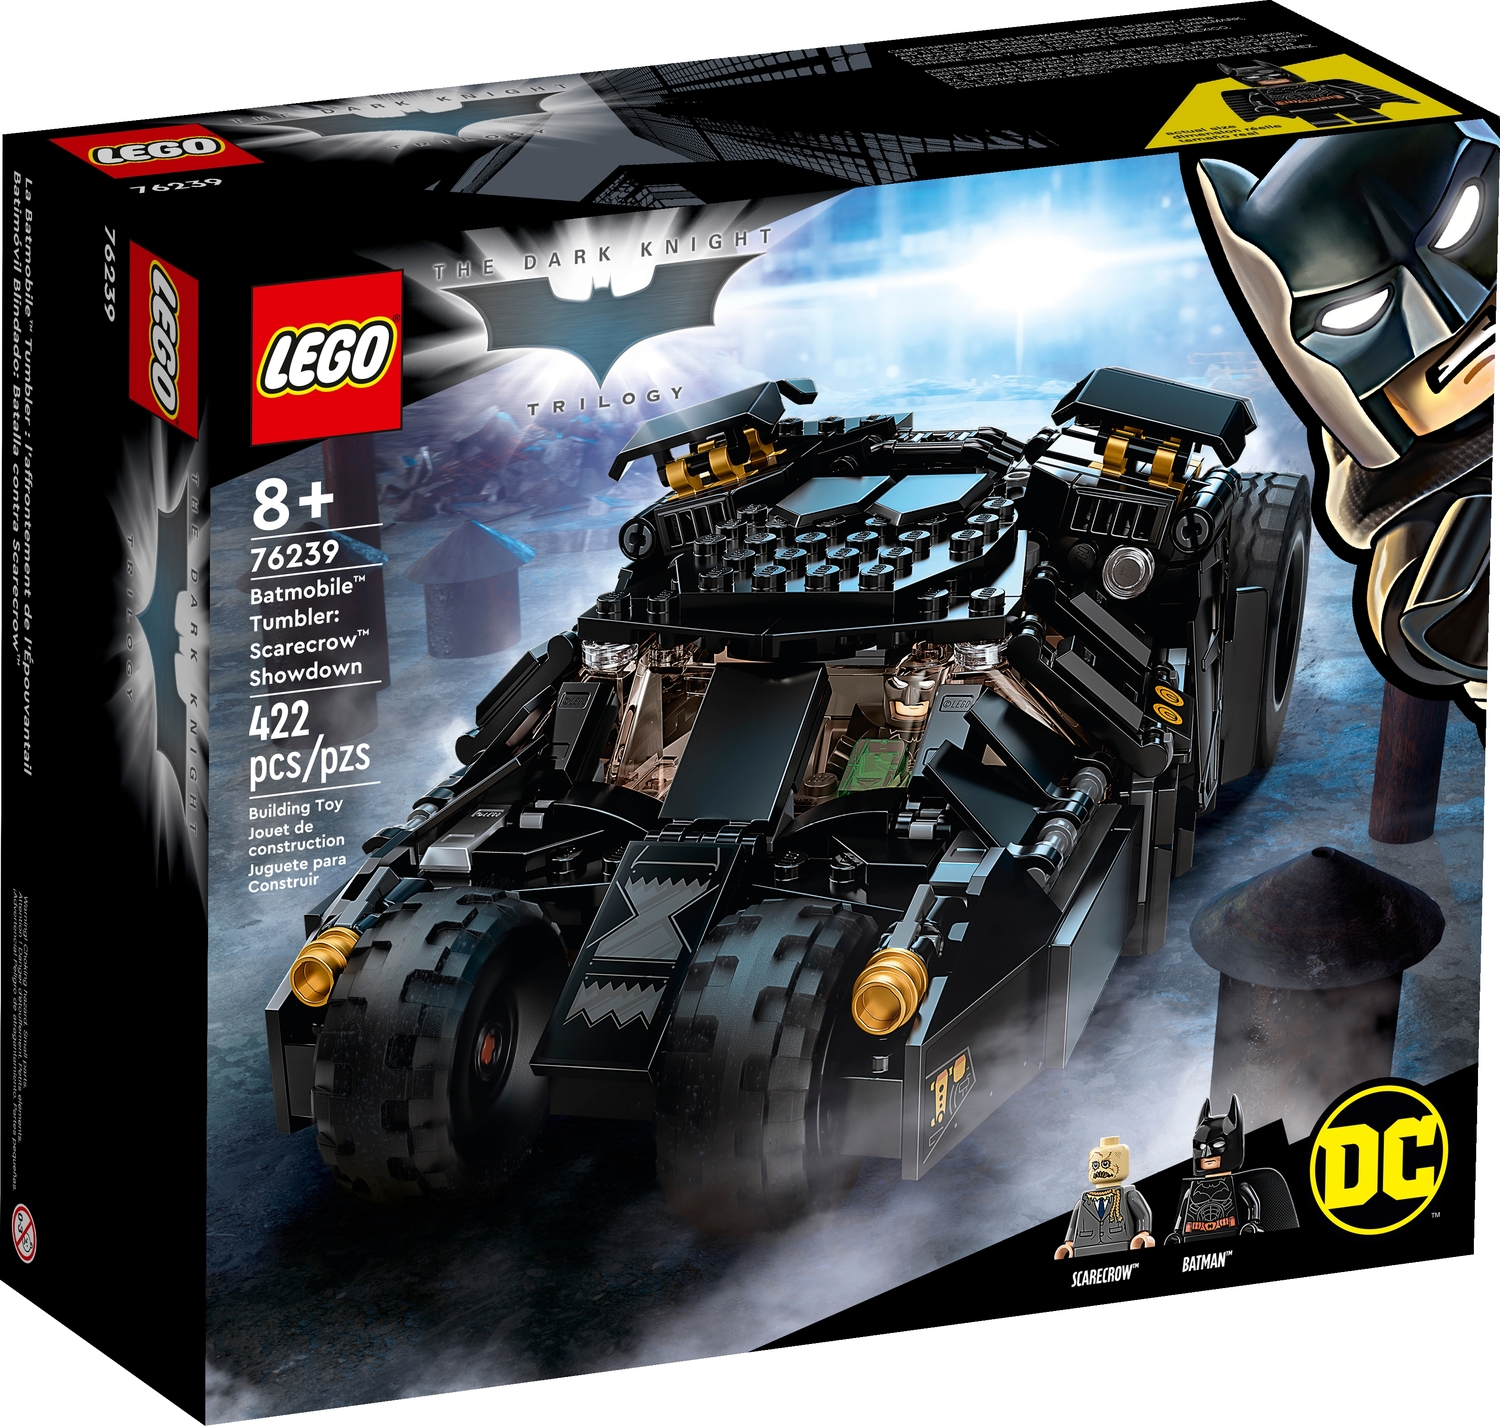 Lego Movie Grapple Gun, Batman's Grapple Gun from the Lego …